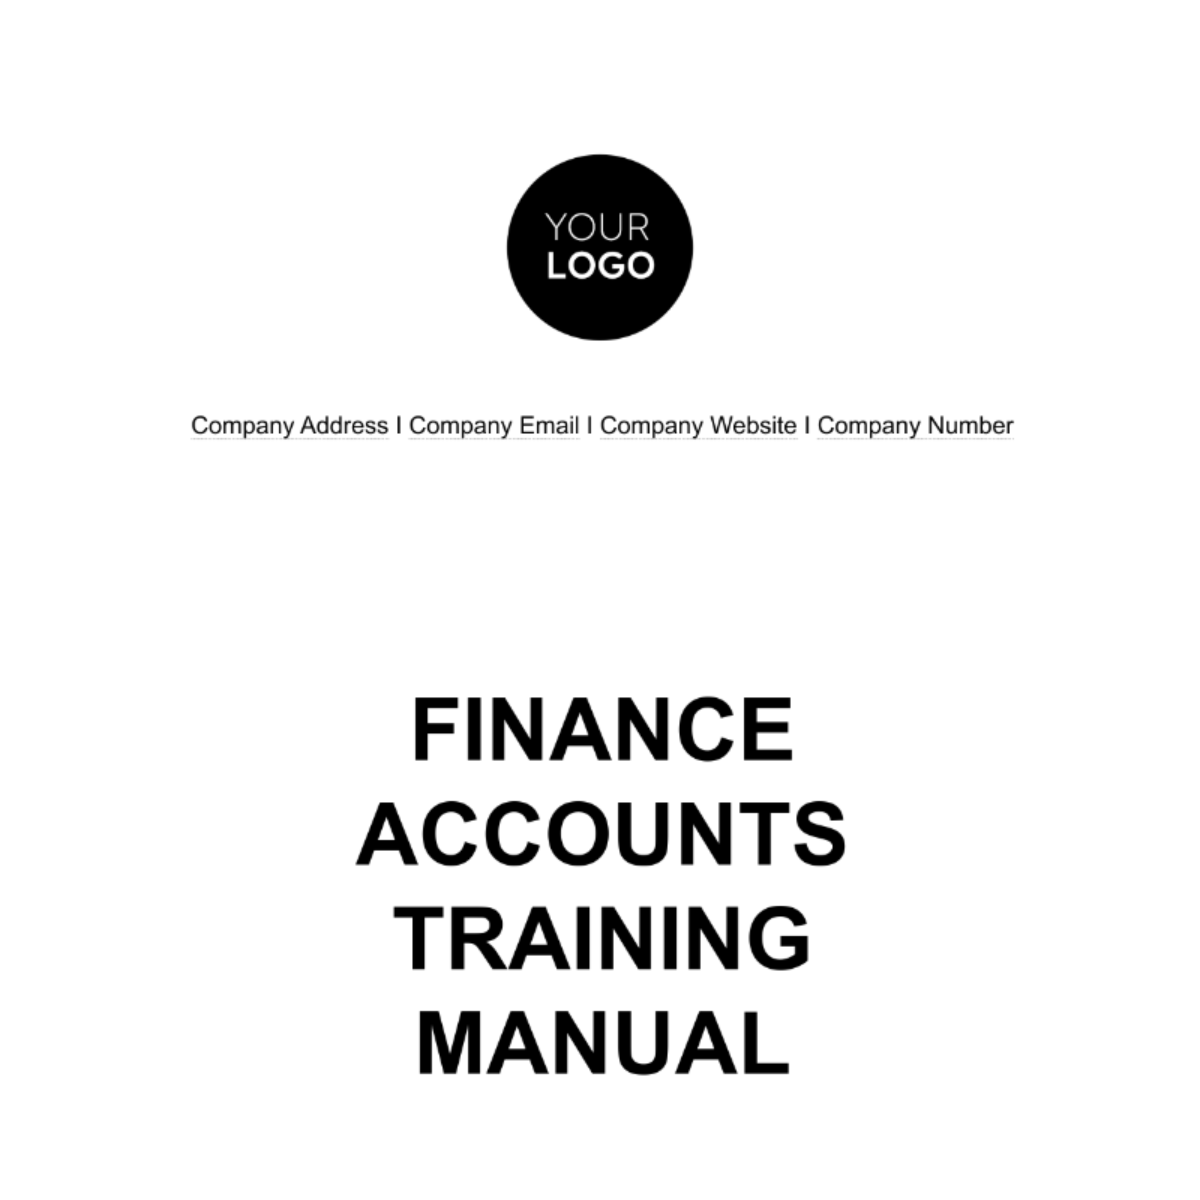 Finance Accounts Training Manual Template